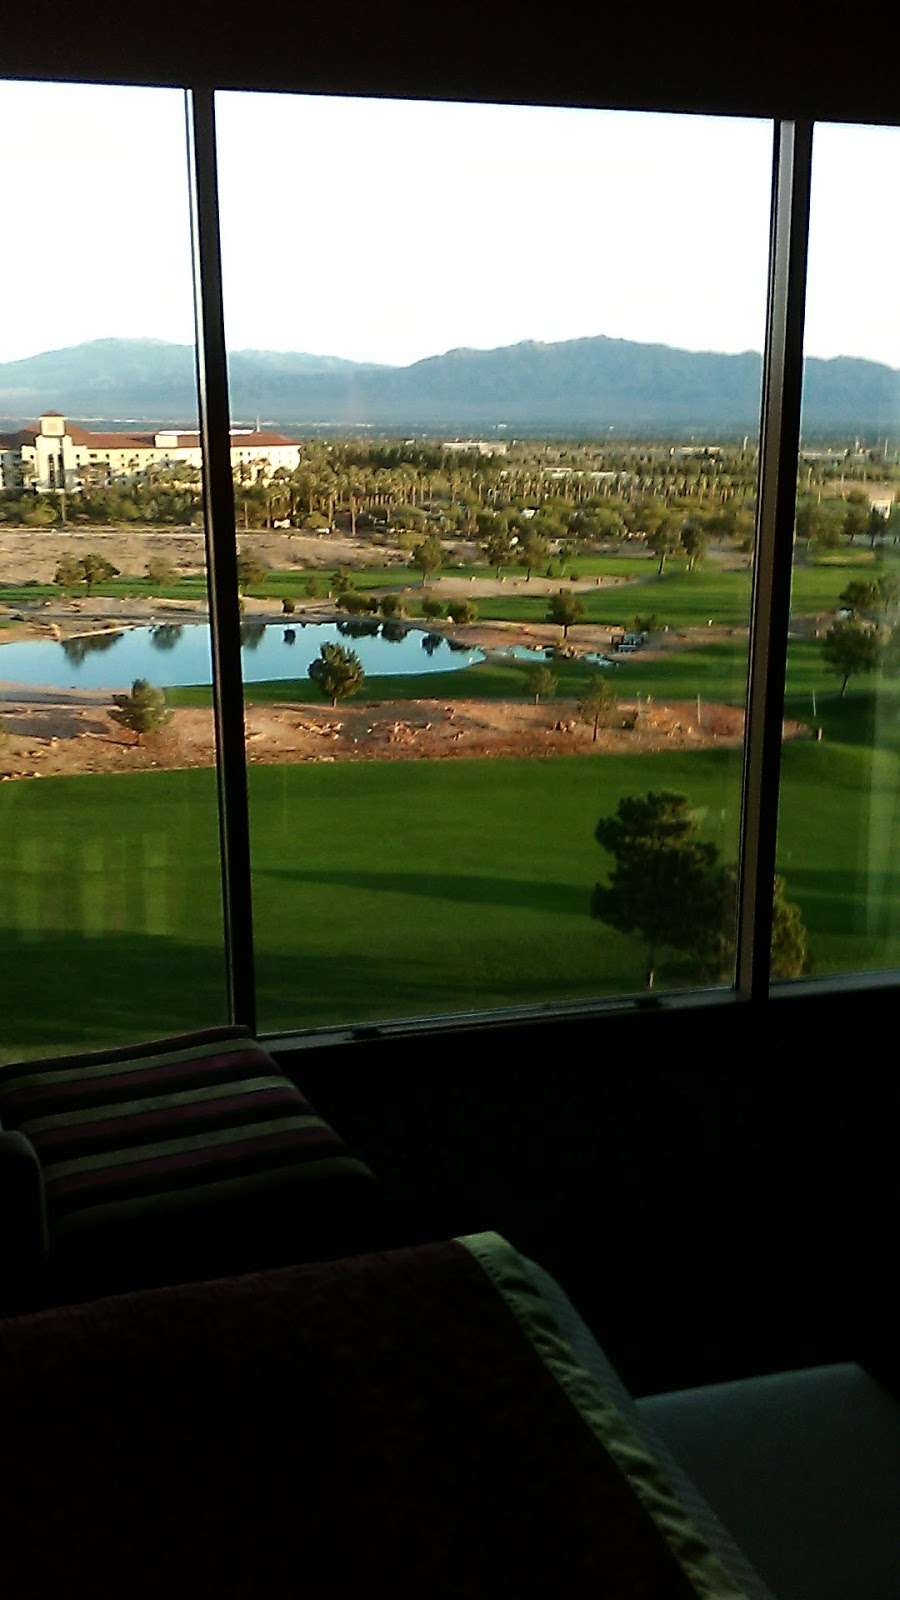 Suncoast Hotel @ Suncoast Hotel (S) | Las Vegas, NV 89144, USA